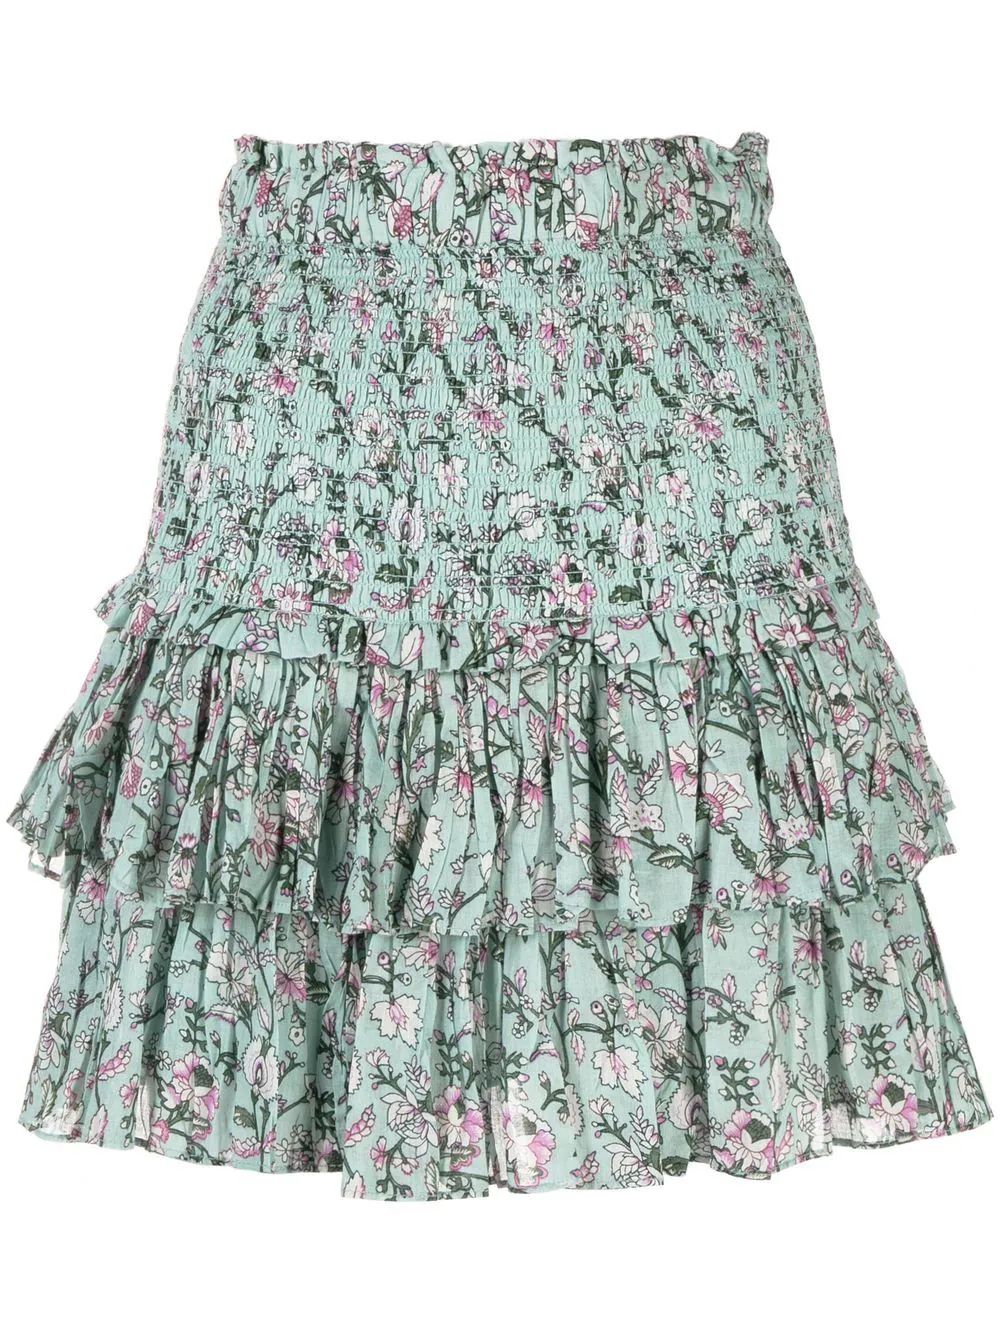 MARANT ÉTOILE floral-print Tiered Ruffle Skirt - Farfetch | Farfetch Global